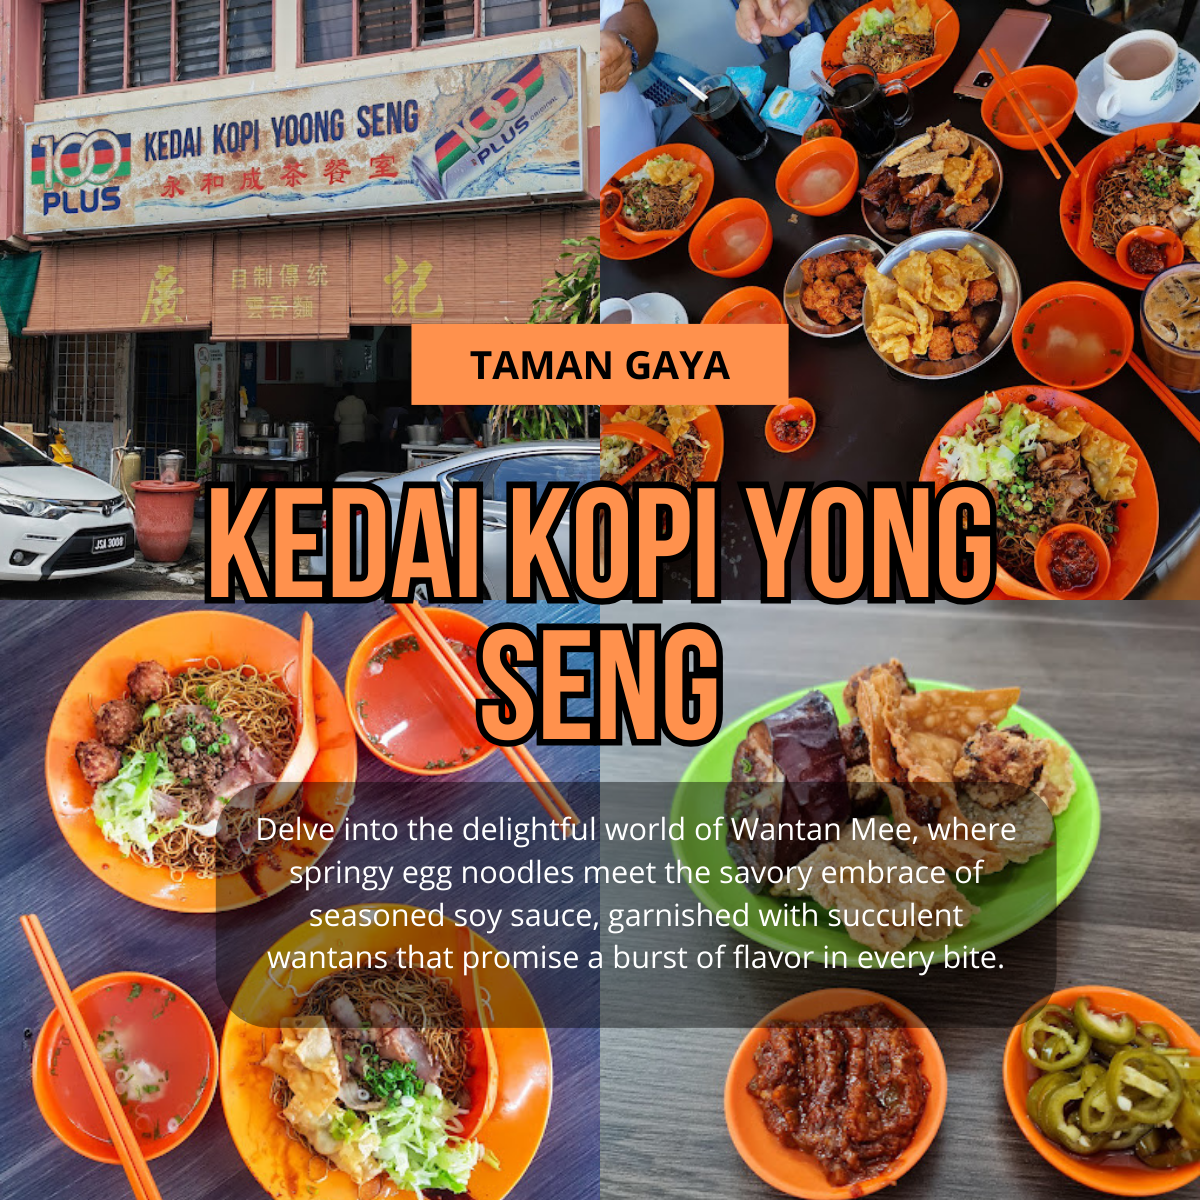 「 Kedai Kopi Yoong Seng 」: A Culinary Voyage through Authentic Malaysian Cuisine